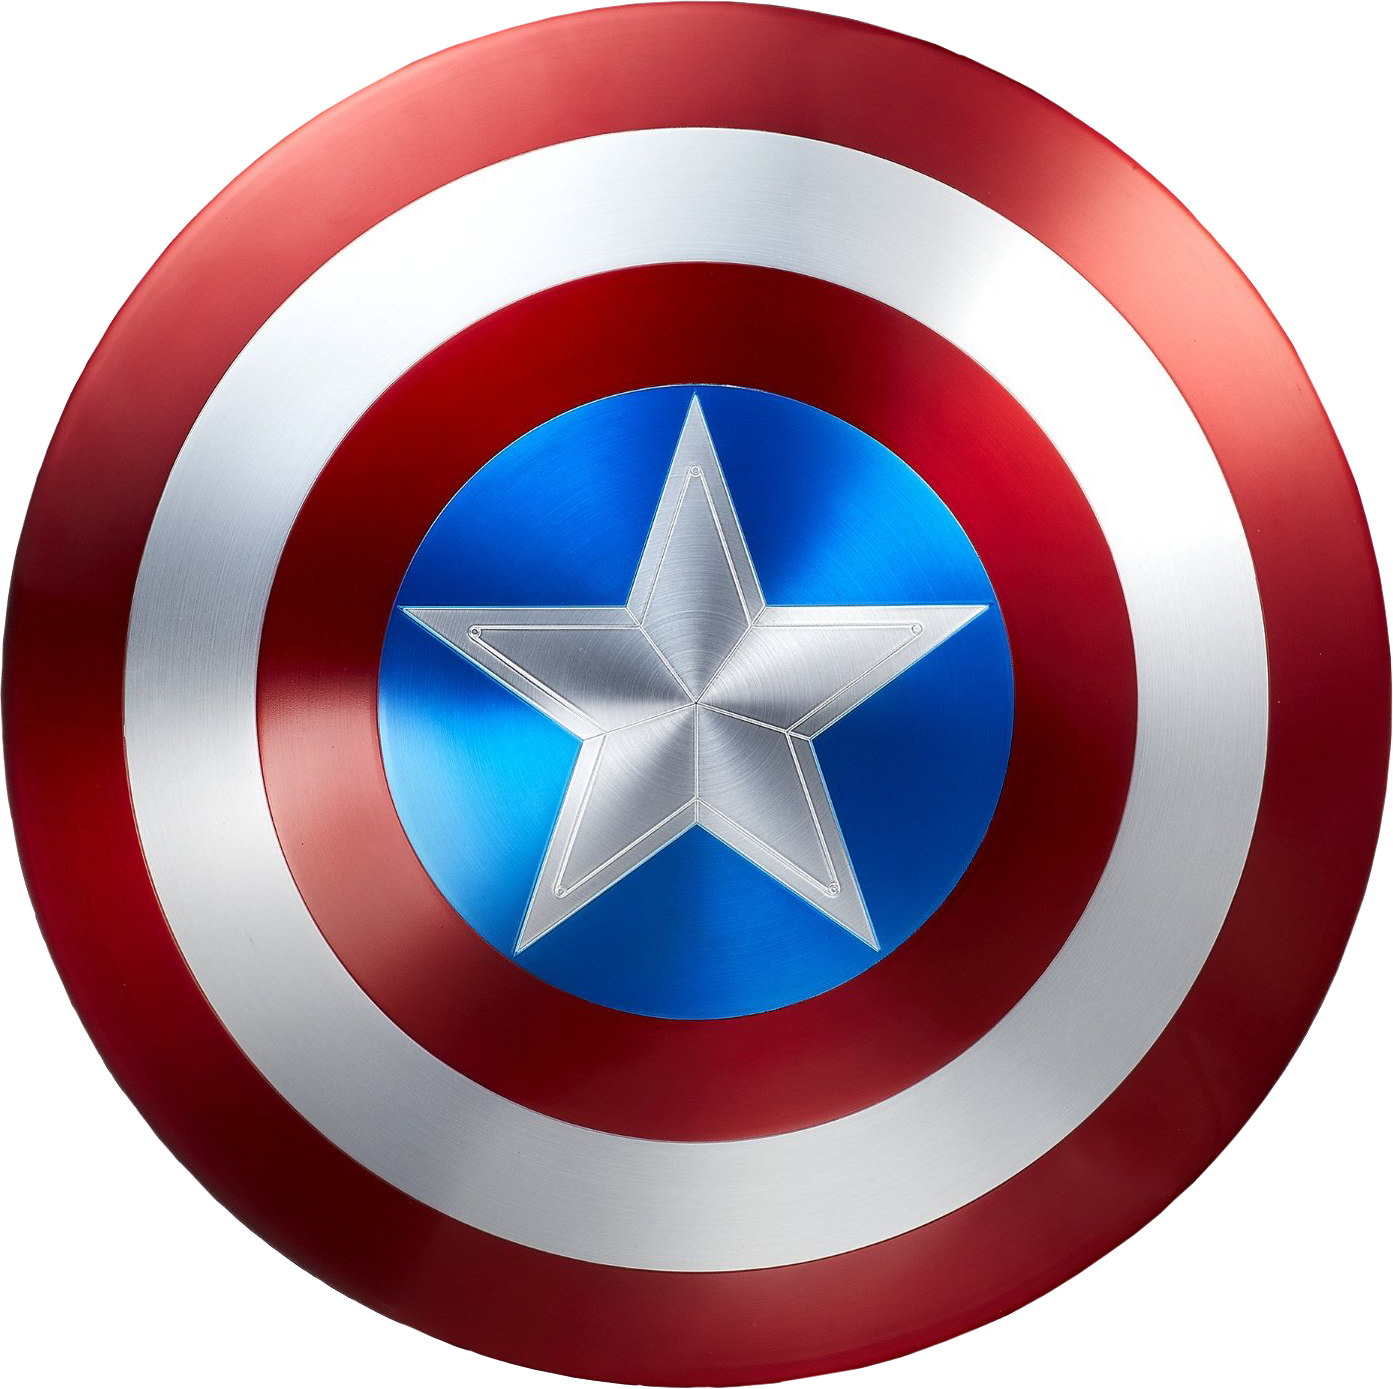 Captain America S Shield Black Widow Red Skull Marvel Legends Captain America Shield Png Png Download 1393 1389 Free Transparent Captain America Png Download Clip Art Library